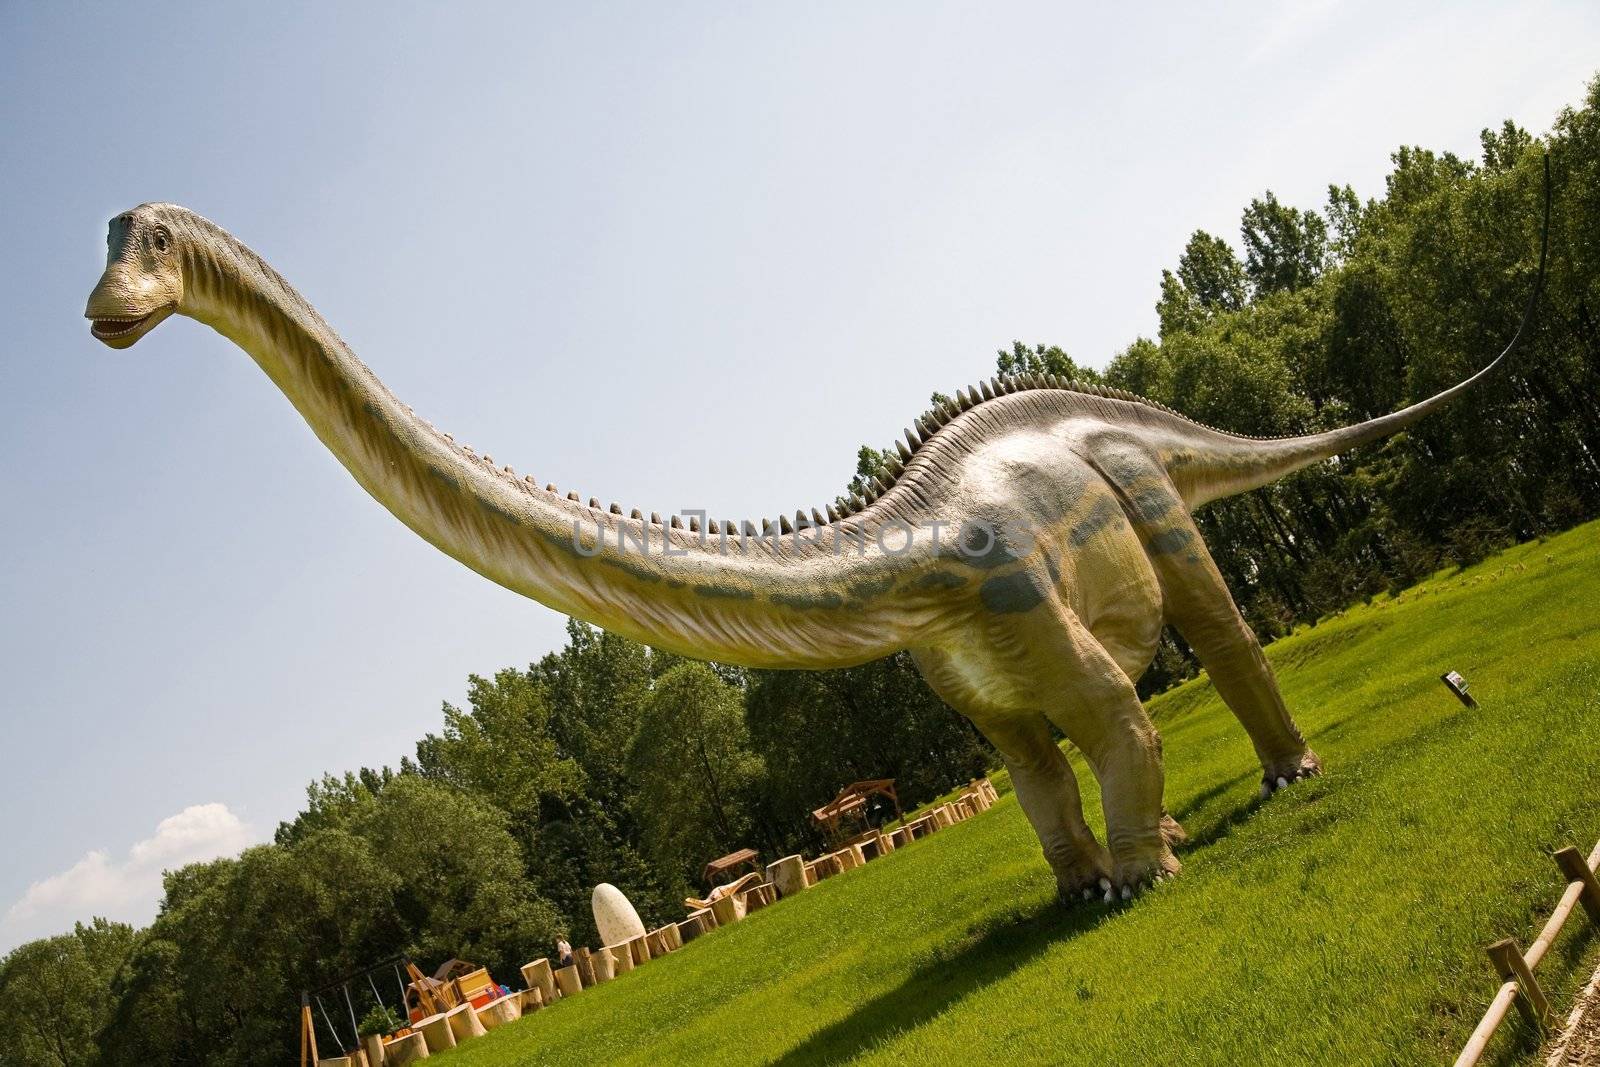 Jurassic park - set of dinosaurs - long body of Diplodocus longus